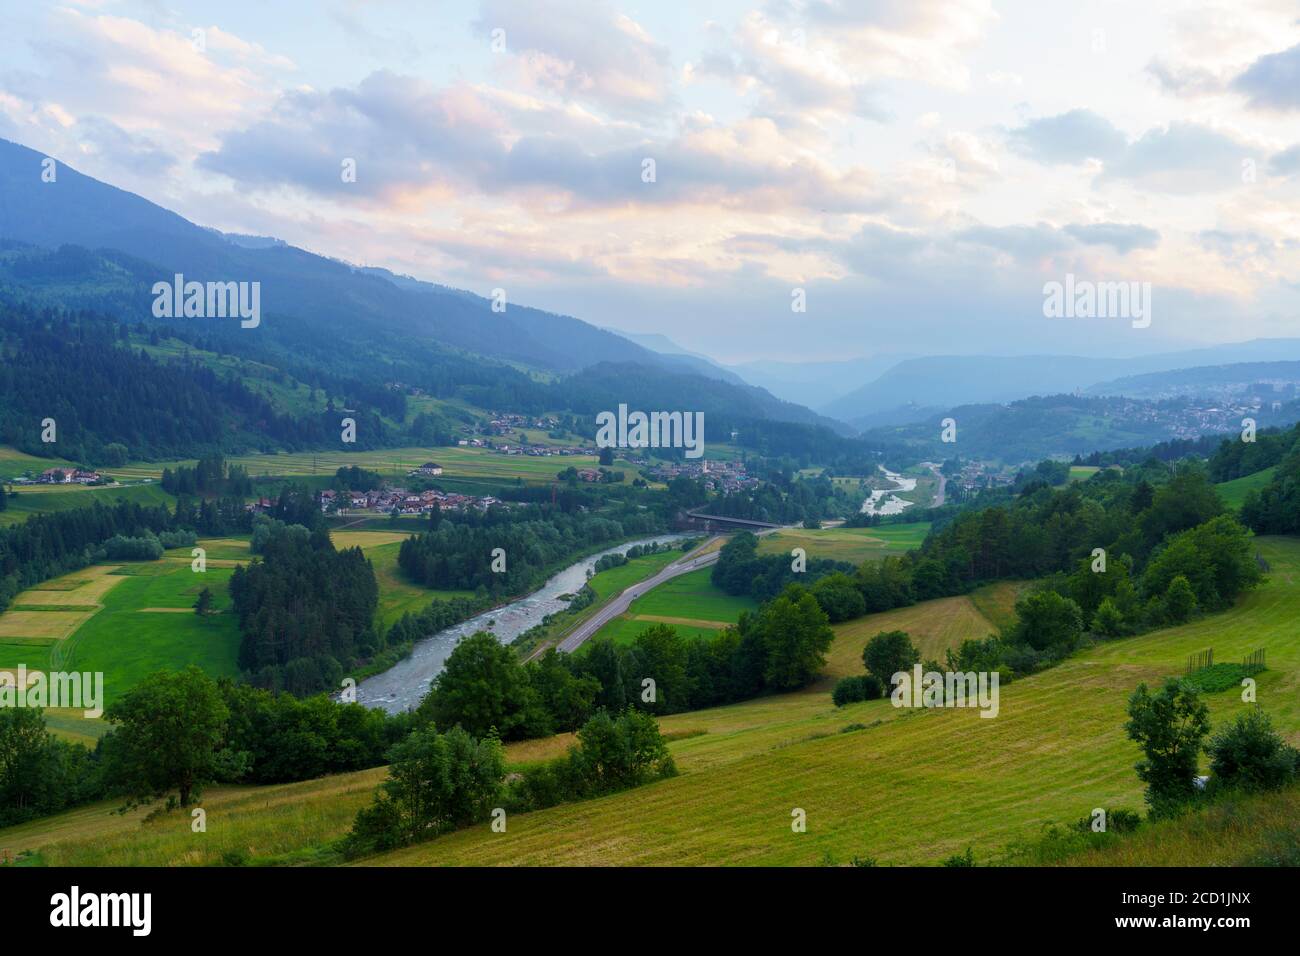 Mountain landscape at Tesero in the Fiemme valley, Dolomites, Trentino Alto Adige, Italy, at summer Stock Photo